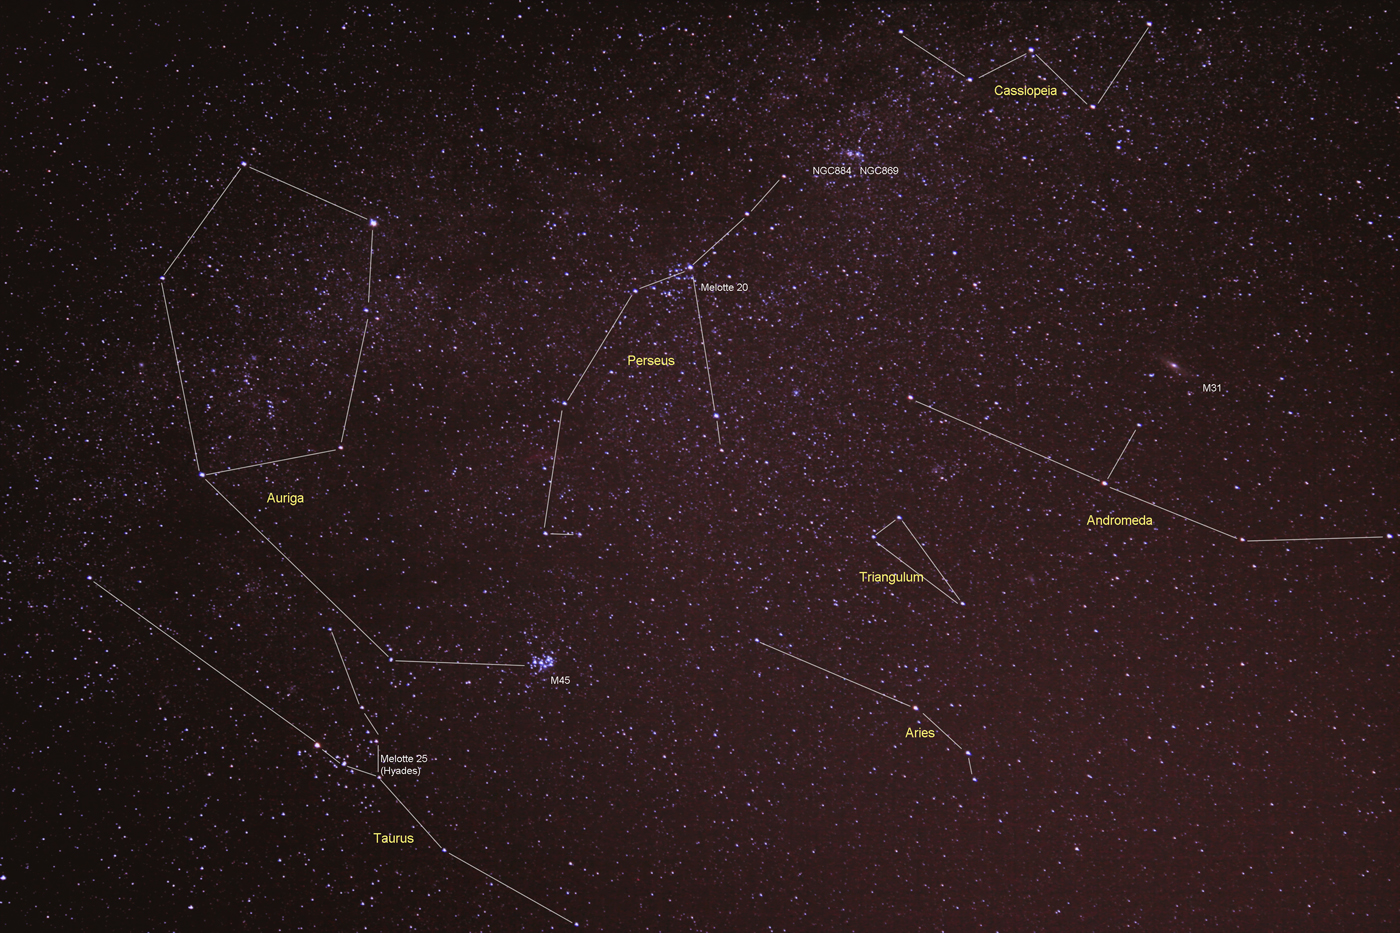 constellation_1.jpg : 별자리 공부용 사진 하나!~~